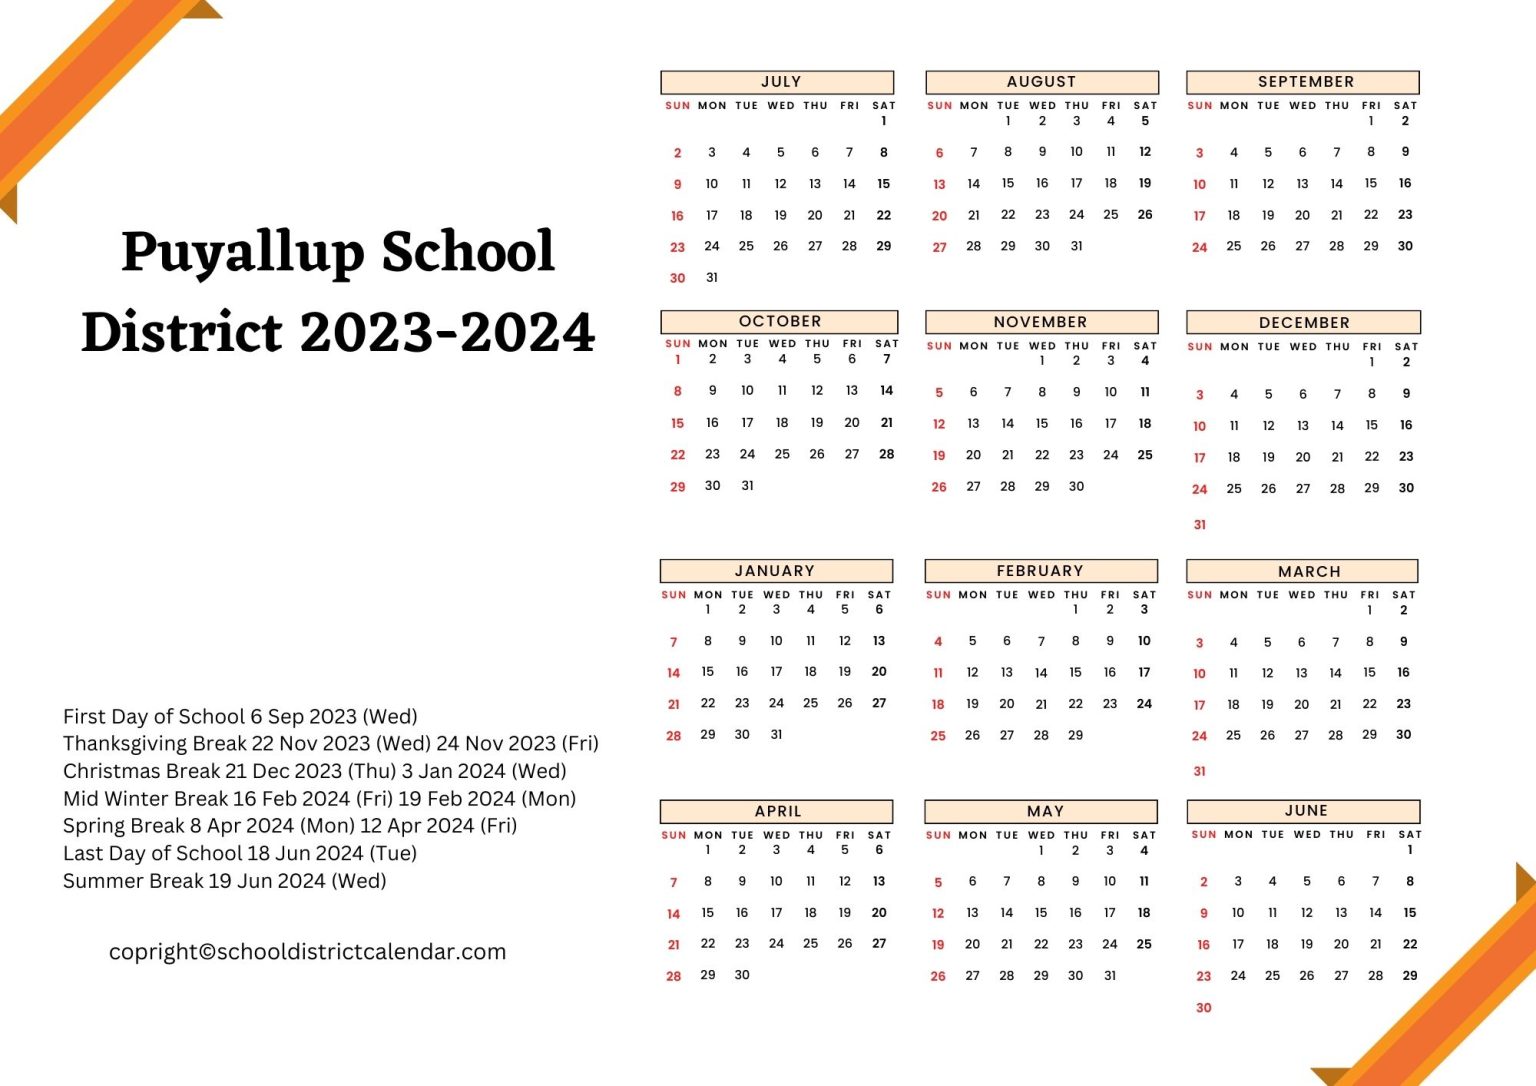 Puyallup School District Calendar Holidays 20232024